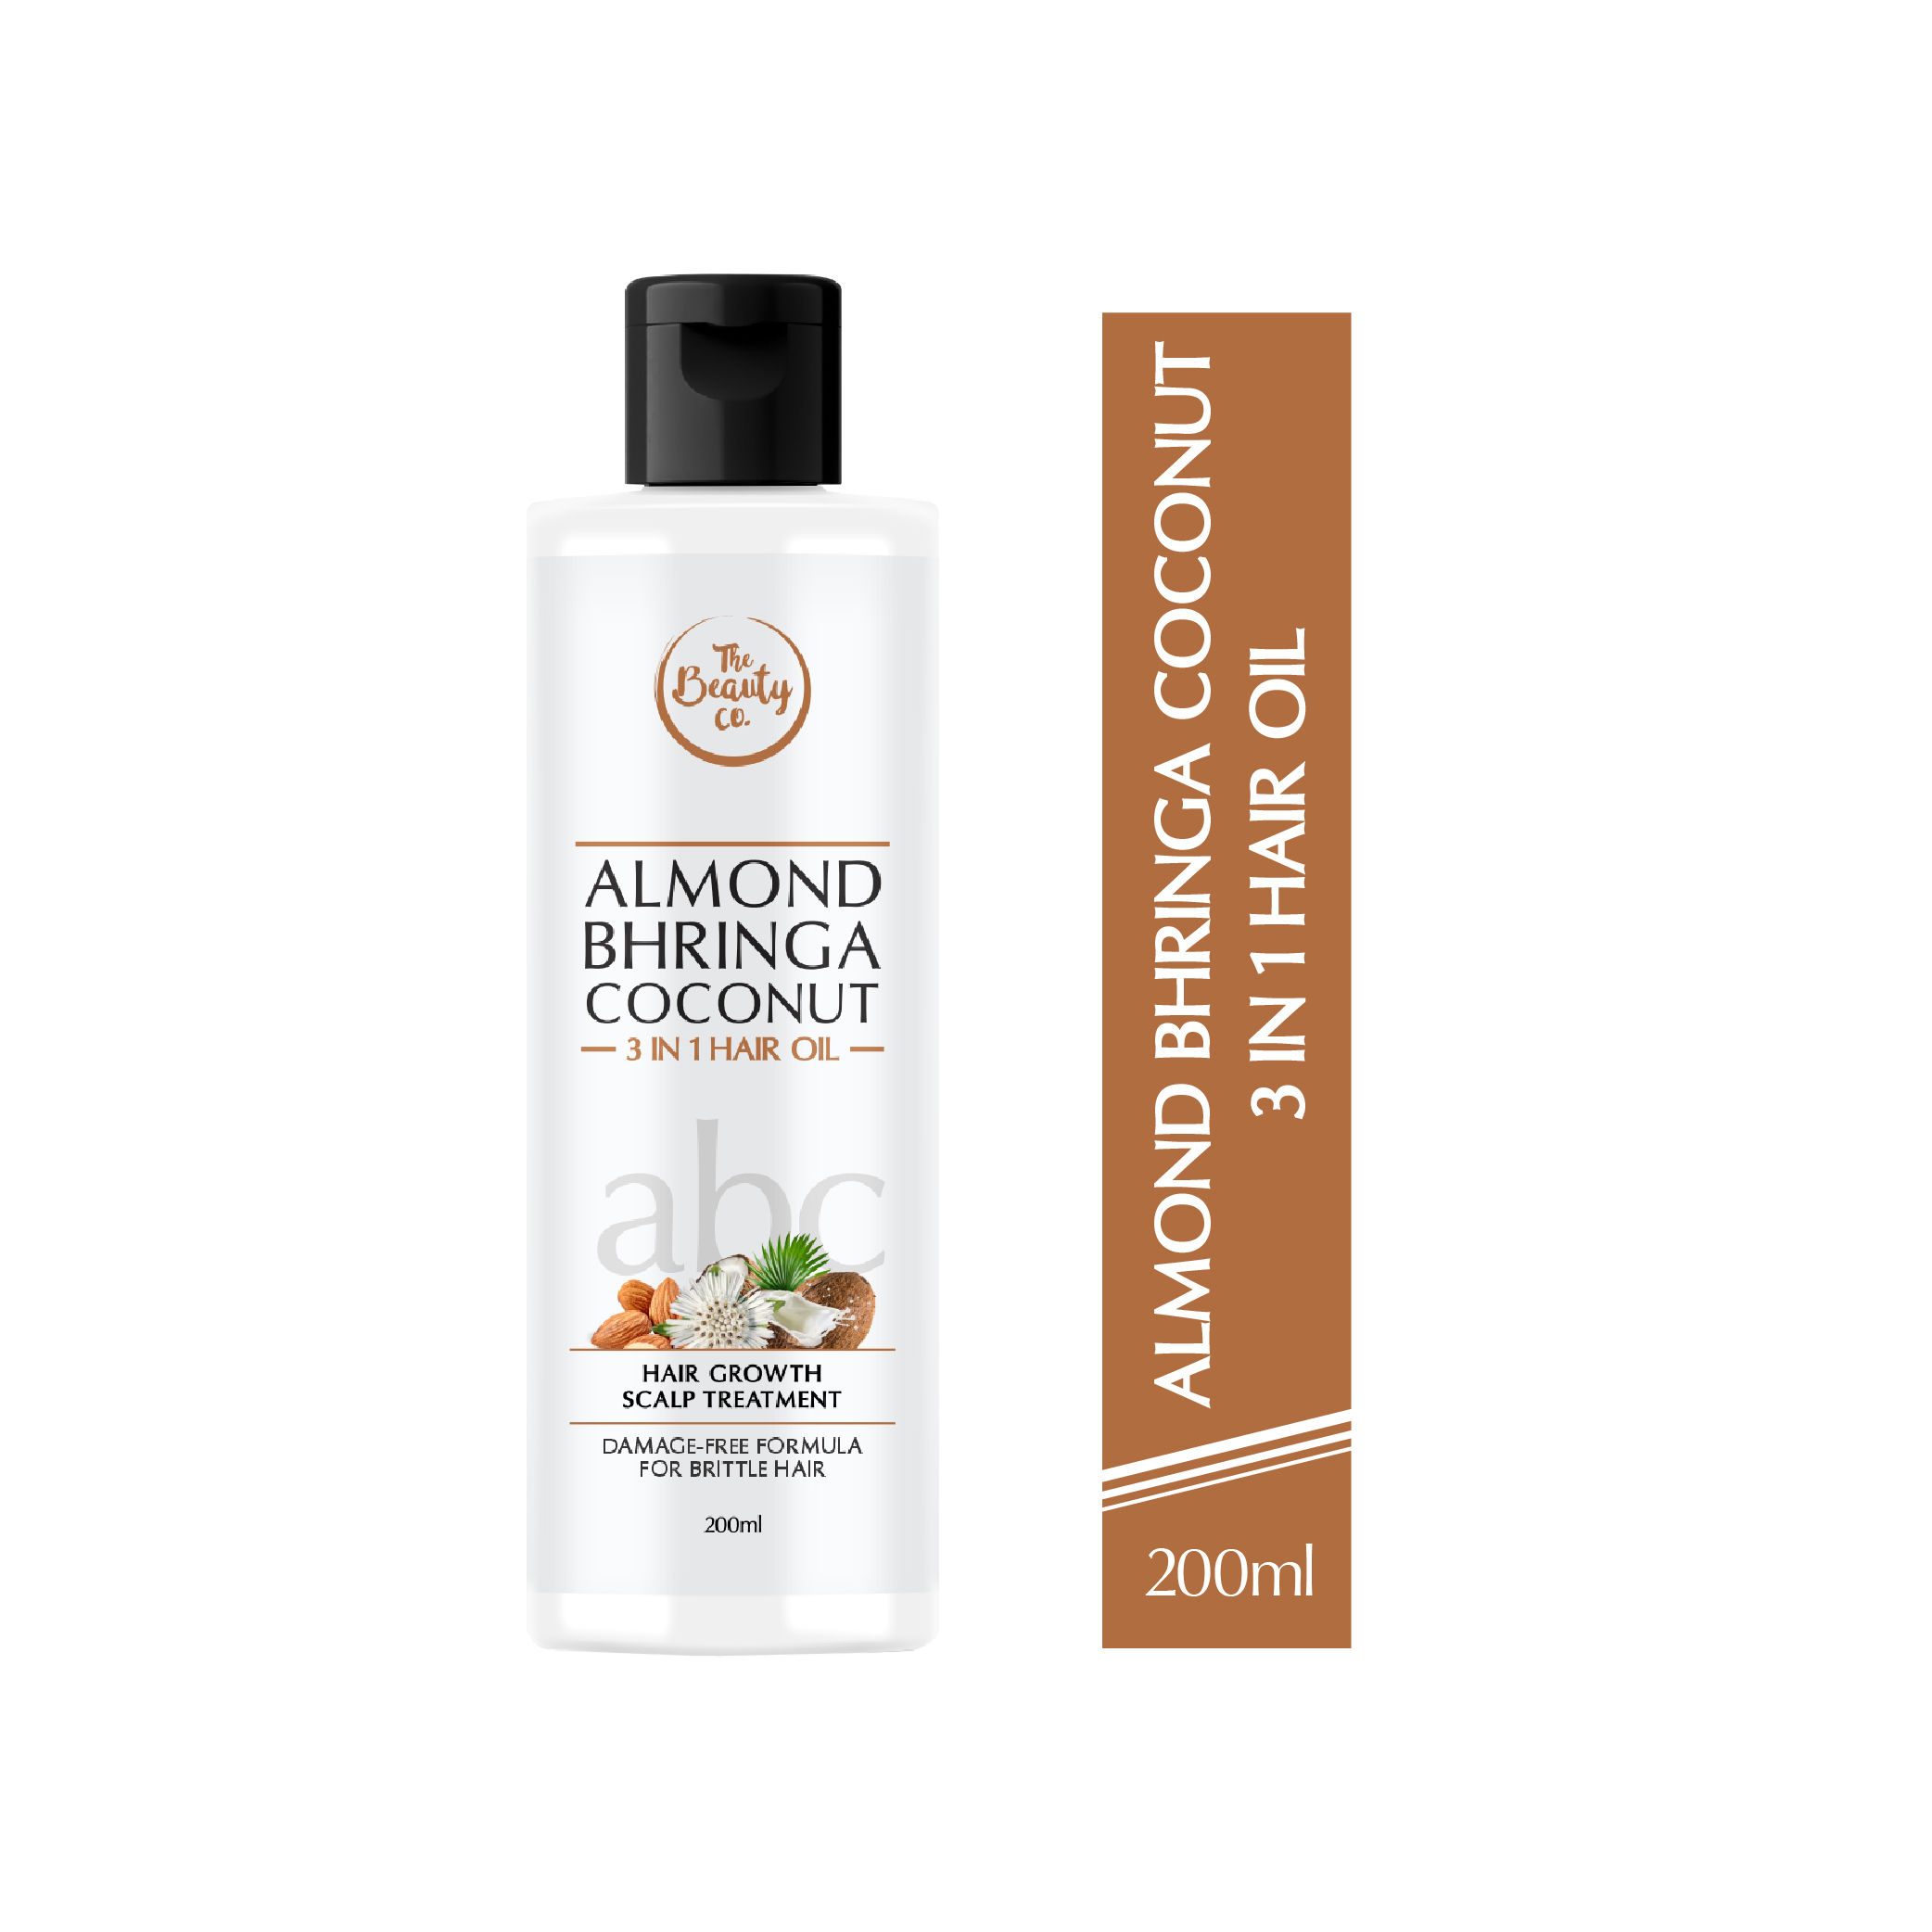 The Beauty Co. Almond Bhringa Coconut 3-in-1 Hair Oil